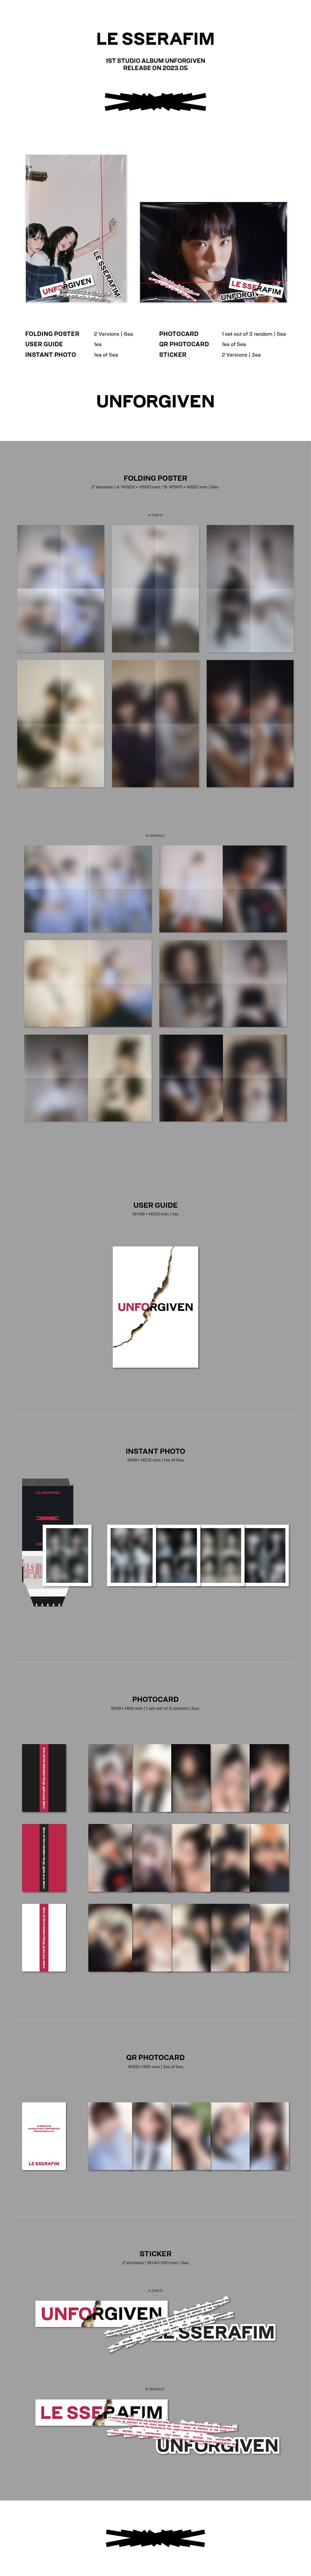 LE SSERAFIM - UNFORGIVEN (1st スタジオ アルバム) Weverse Albums Ver. 2セット